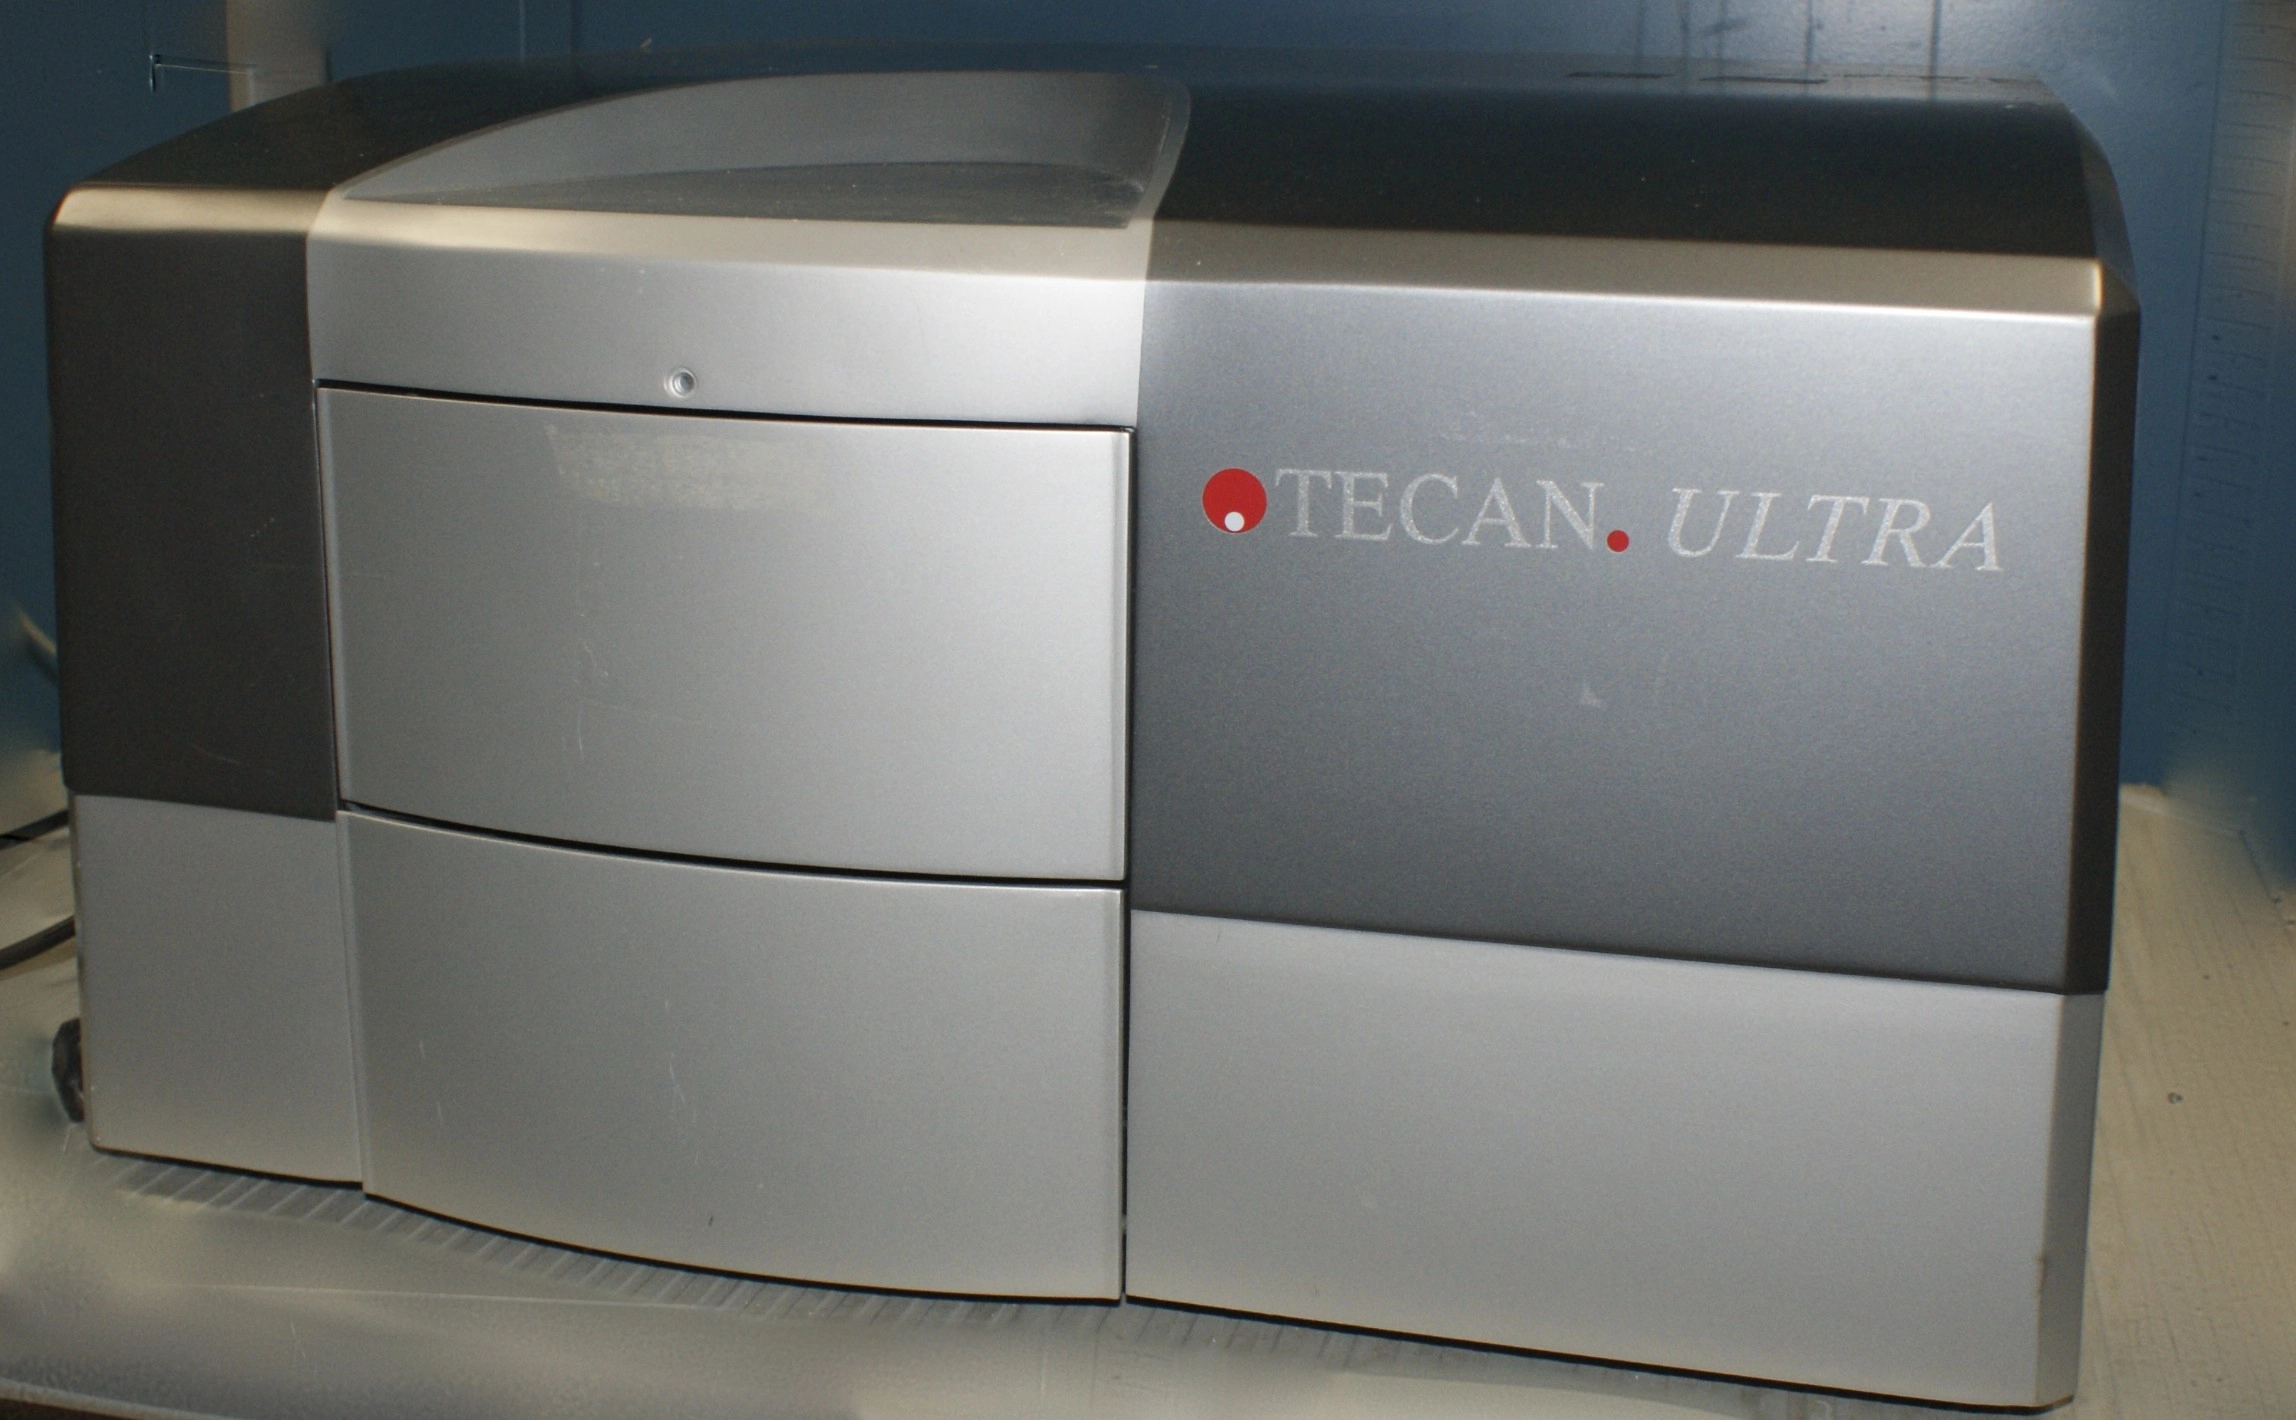 Tecan ULTRA Multifunctional Microplate Reader